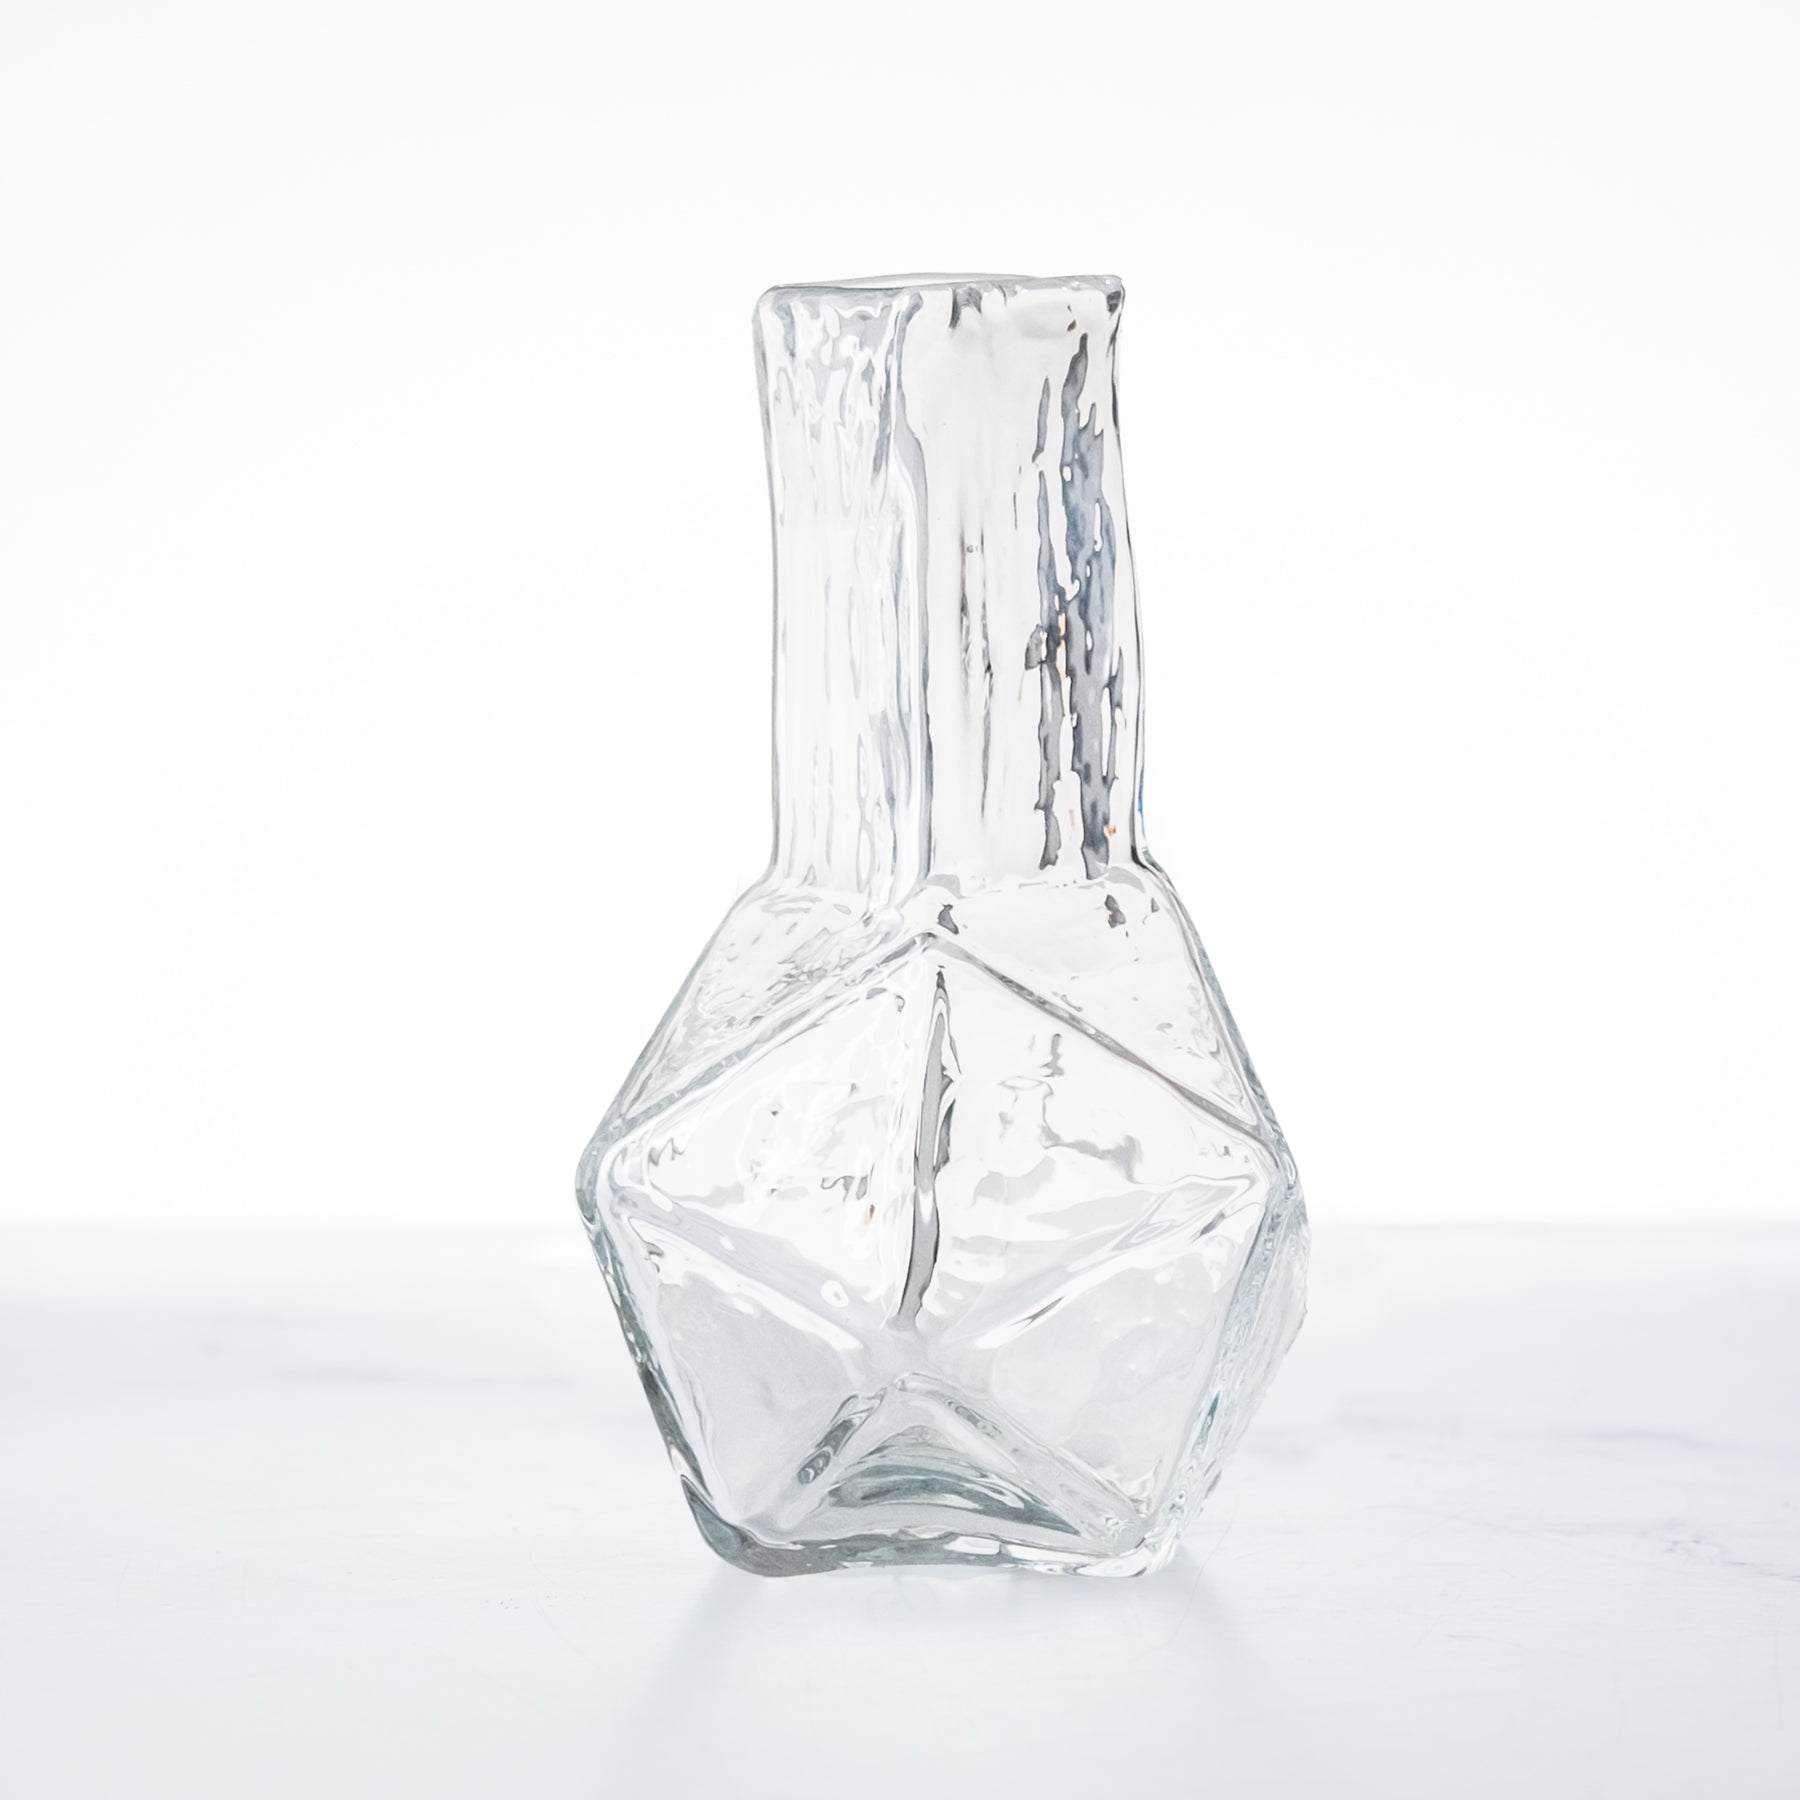 2412 D20 Dice Tower Bud Vase - Crystal